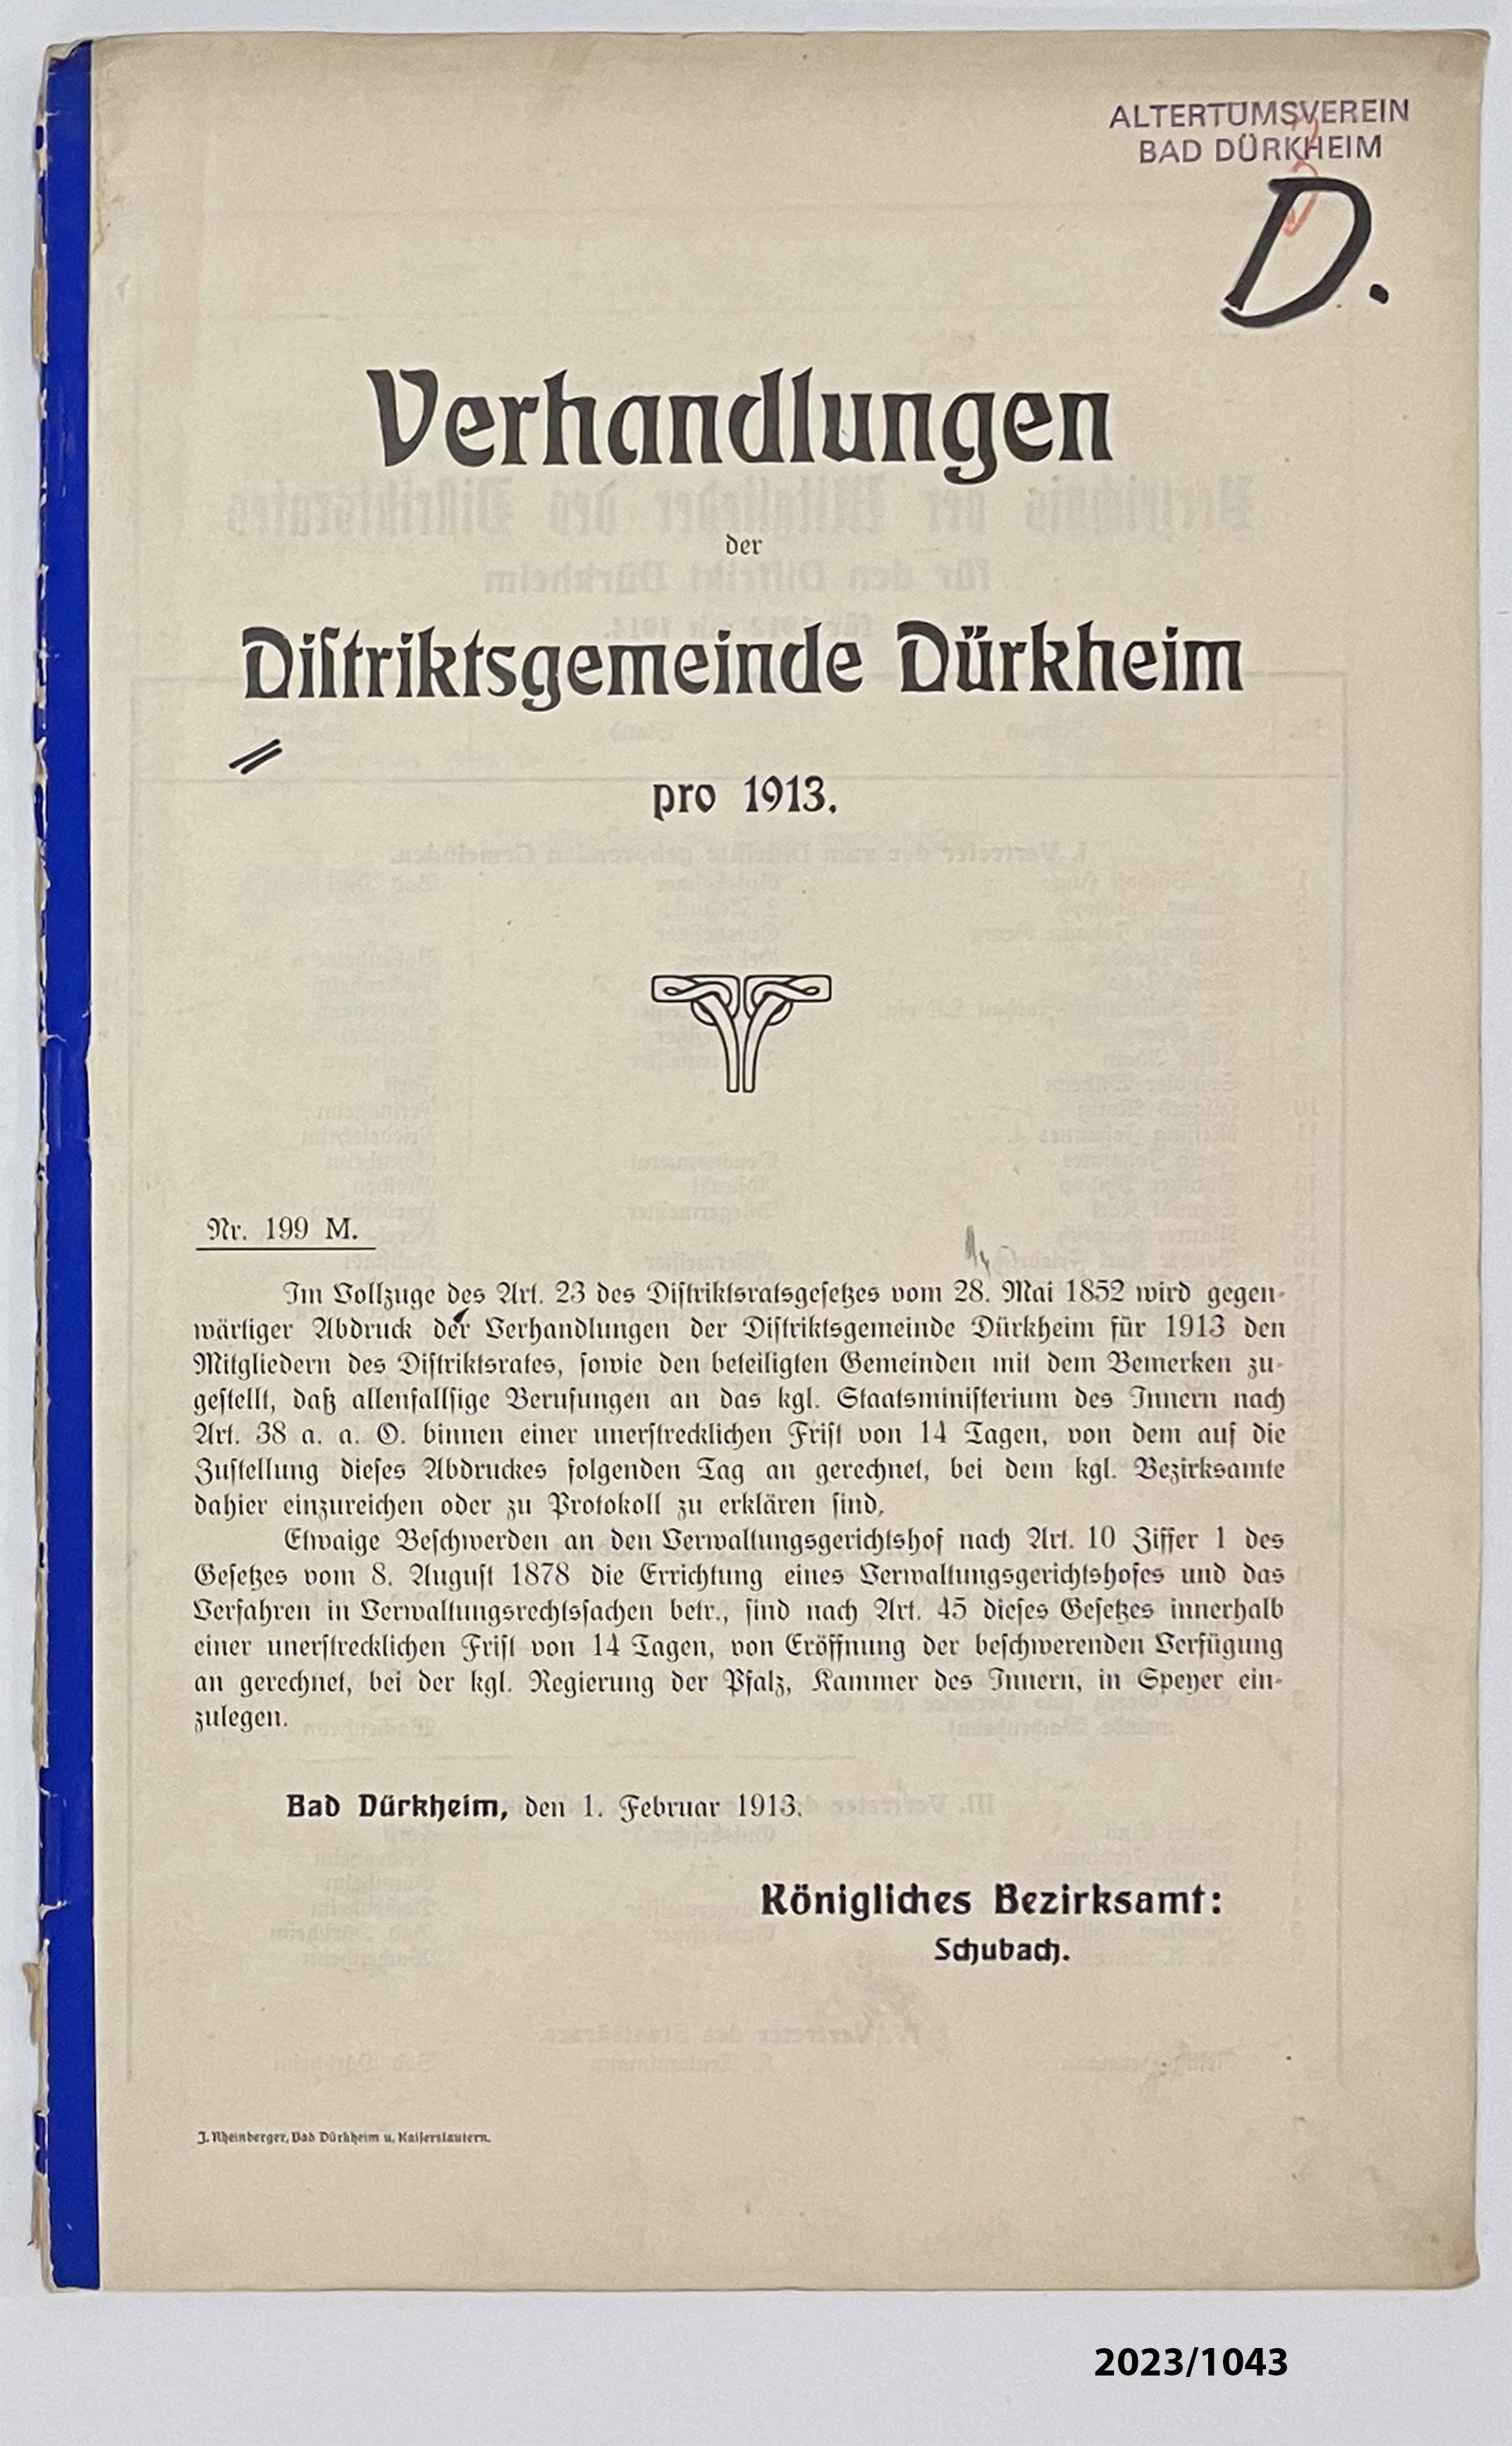 Verhandlungen der Distriktsgemeinde Dürkheim pro 1913 (Stadtmuseum Bad Dürkheim im Kulturzentrum Haus Catoir CC BY-NC-SA)